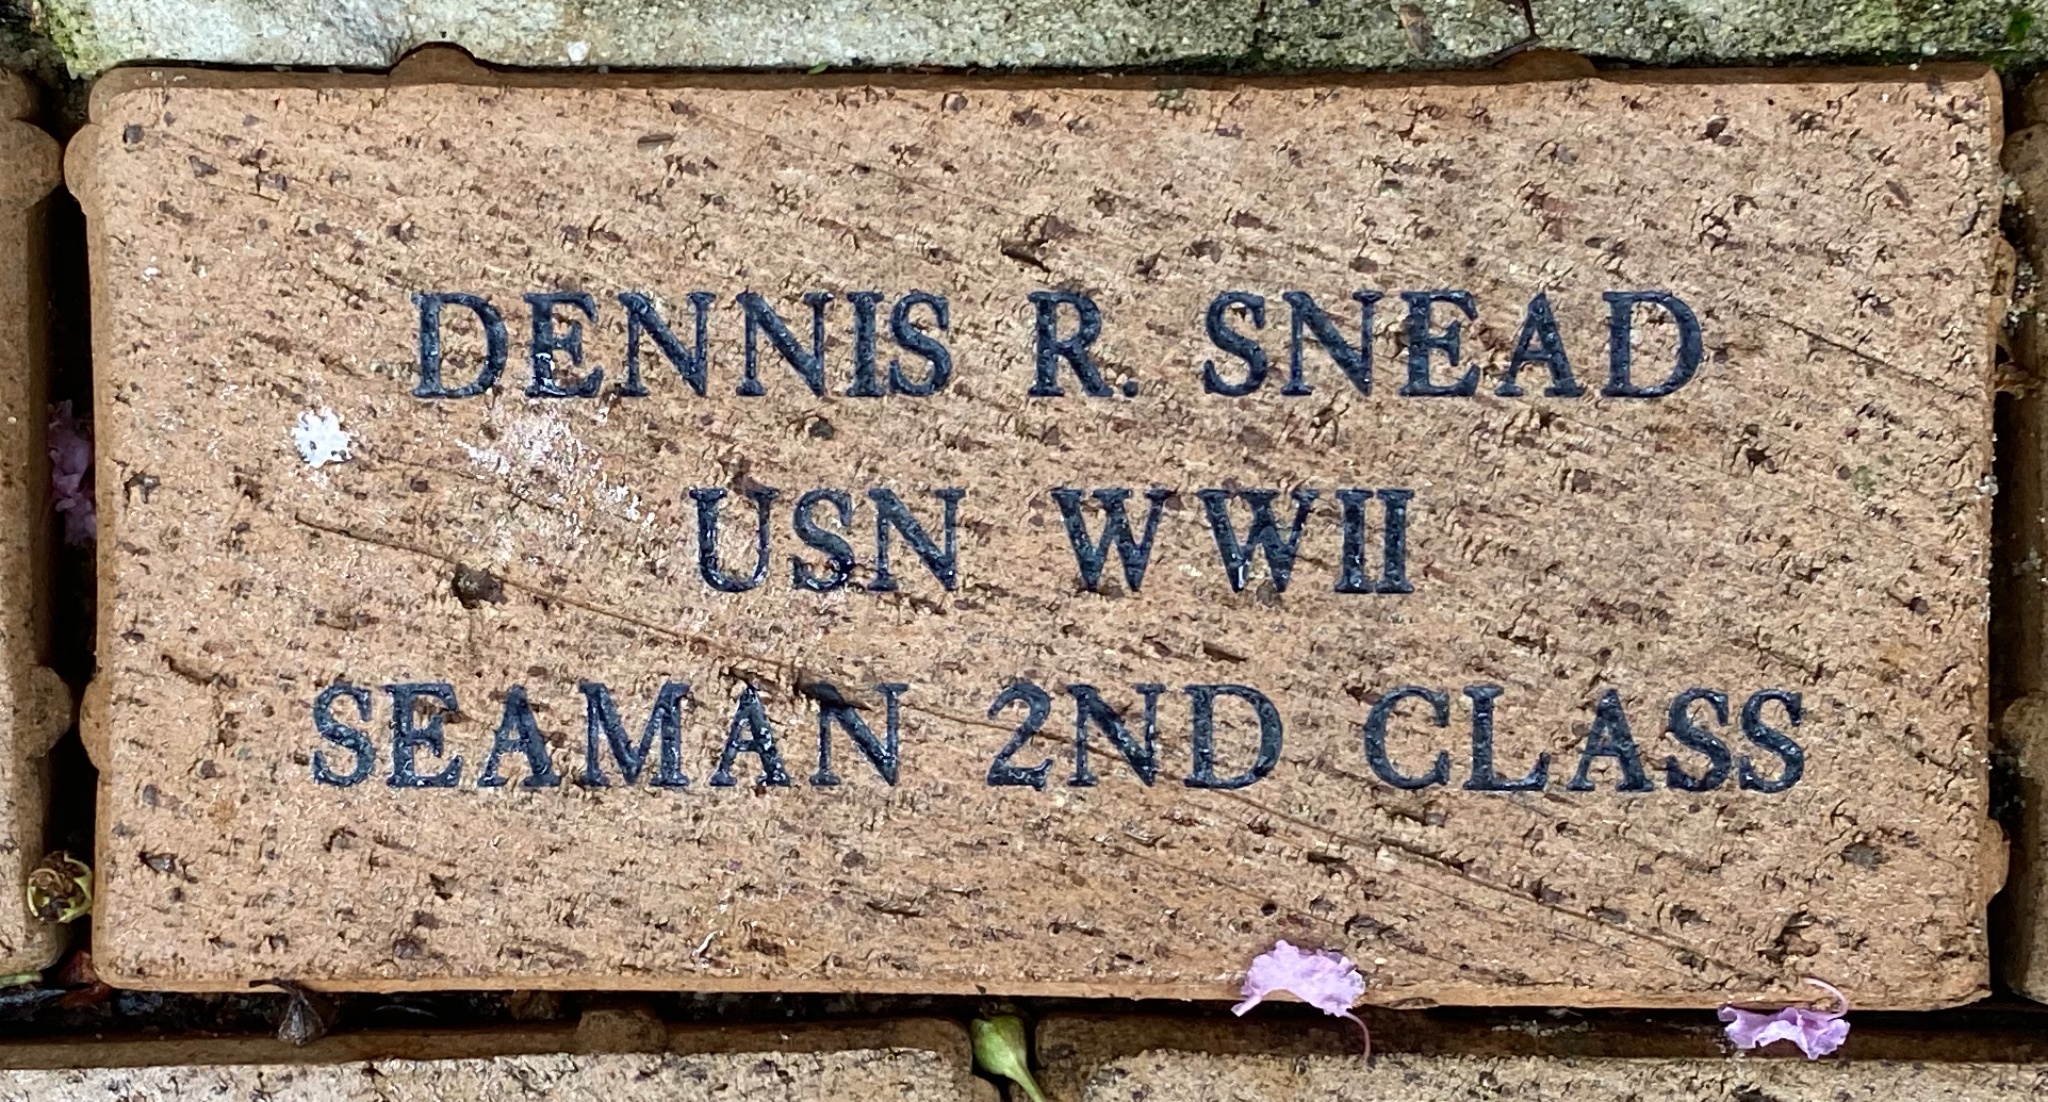 DENNIS R. SNEAD USN WWII SEAMAN 2ND CLASS